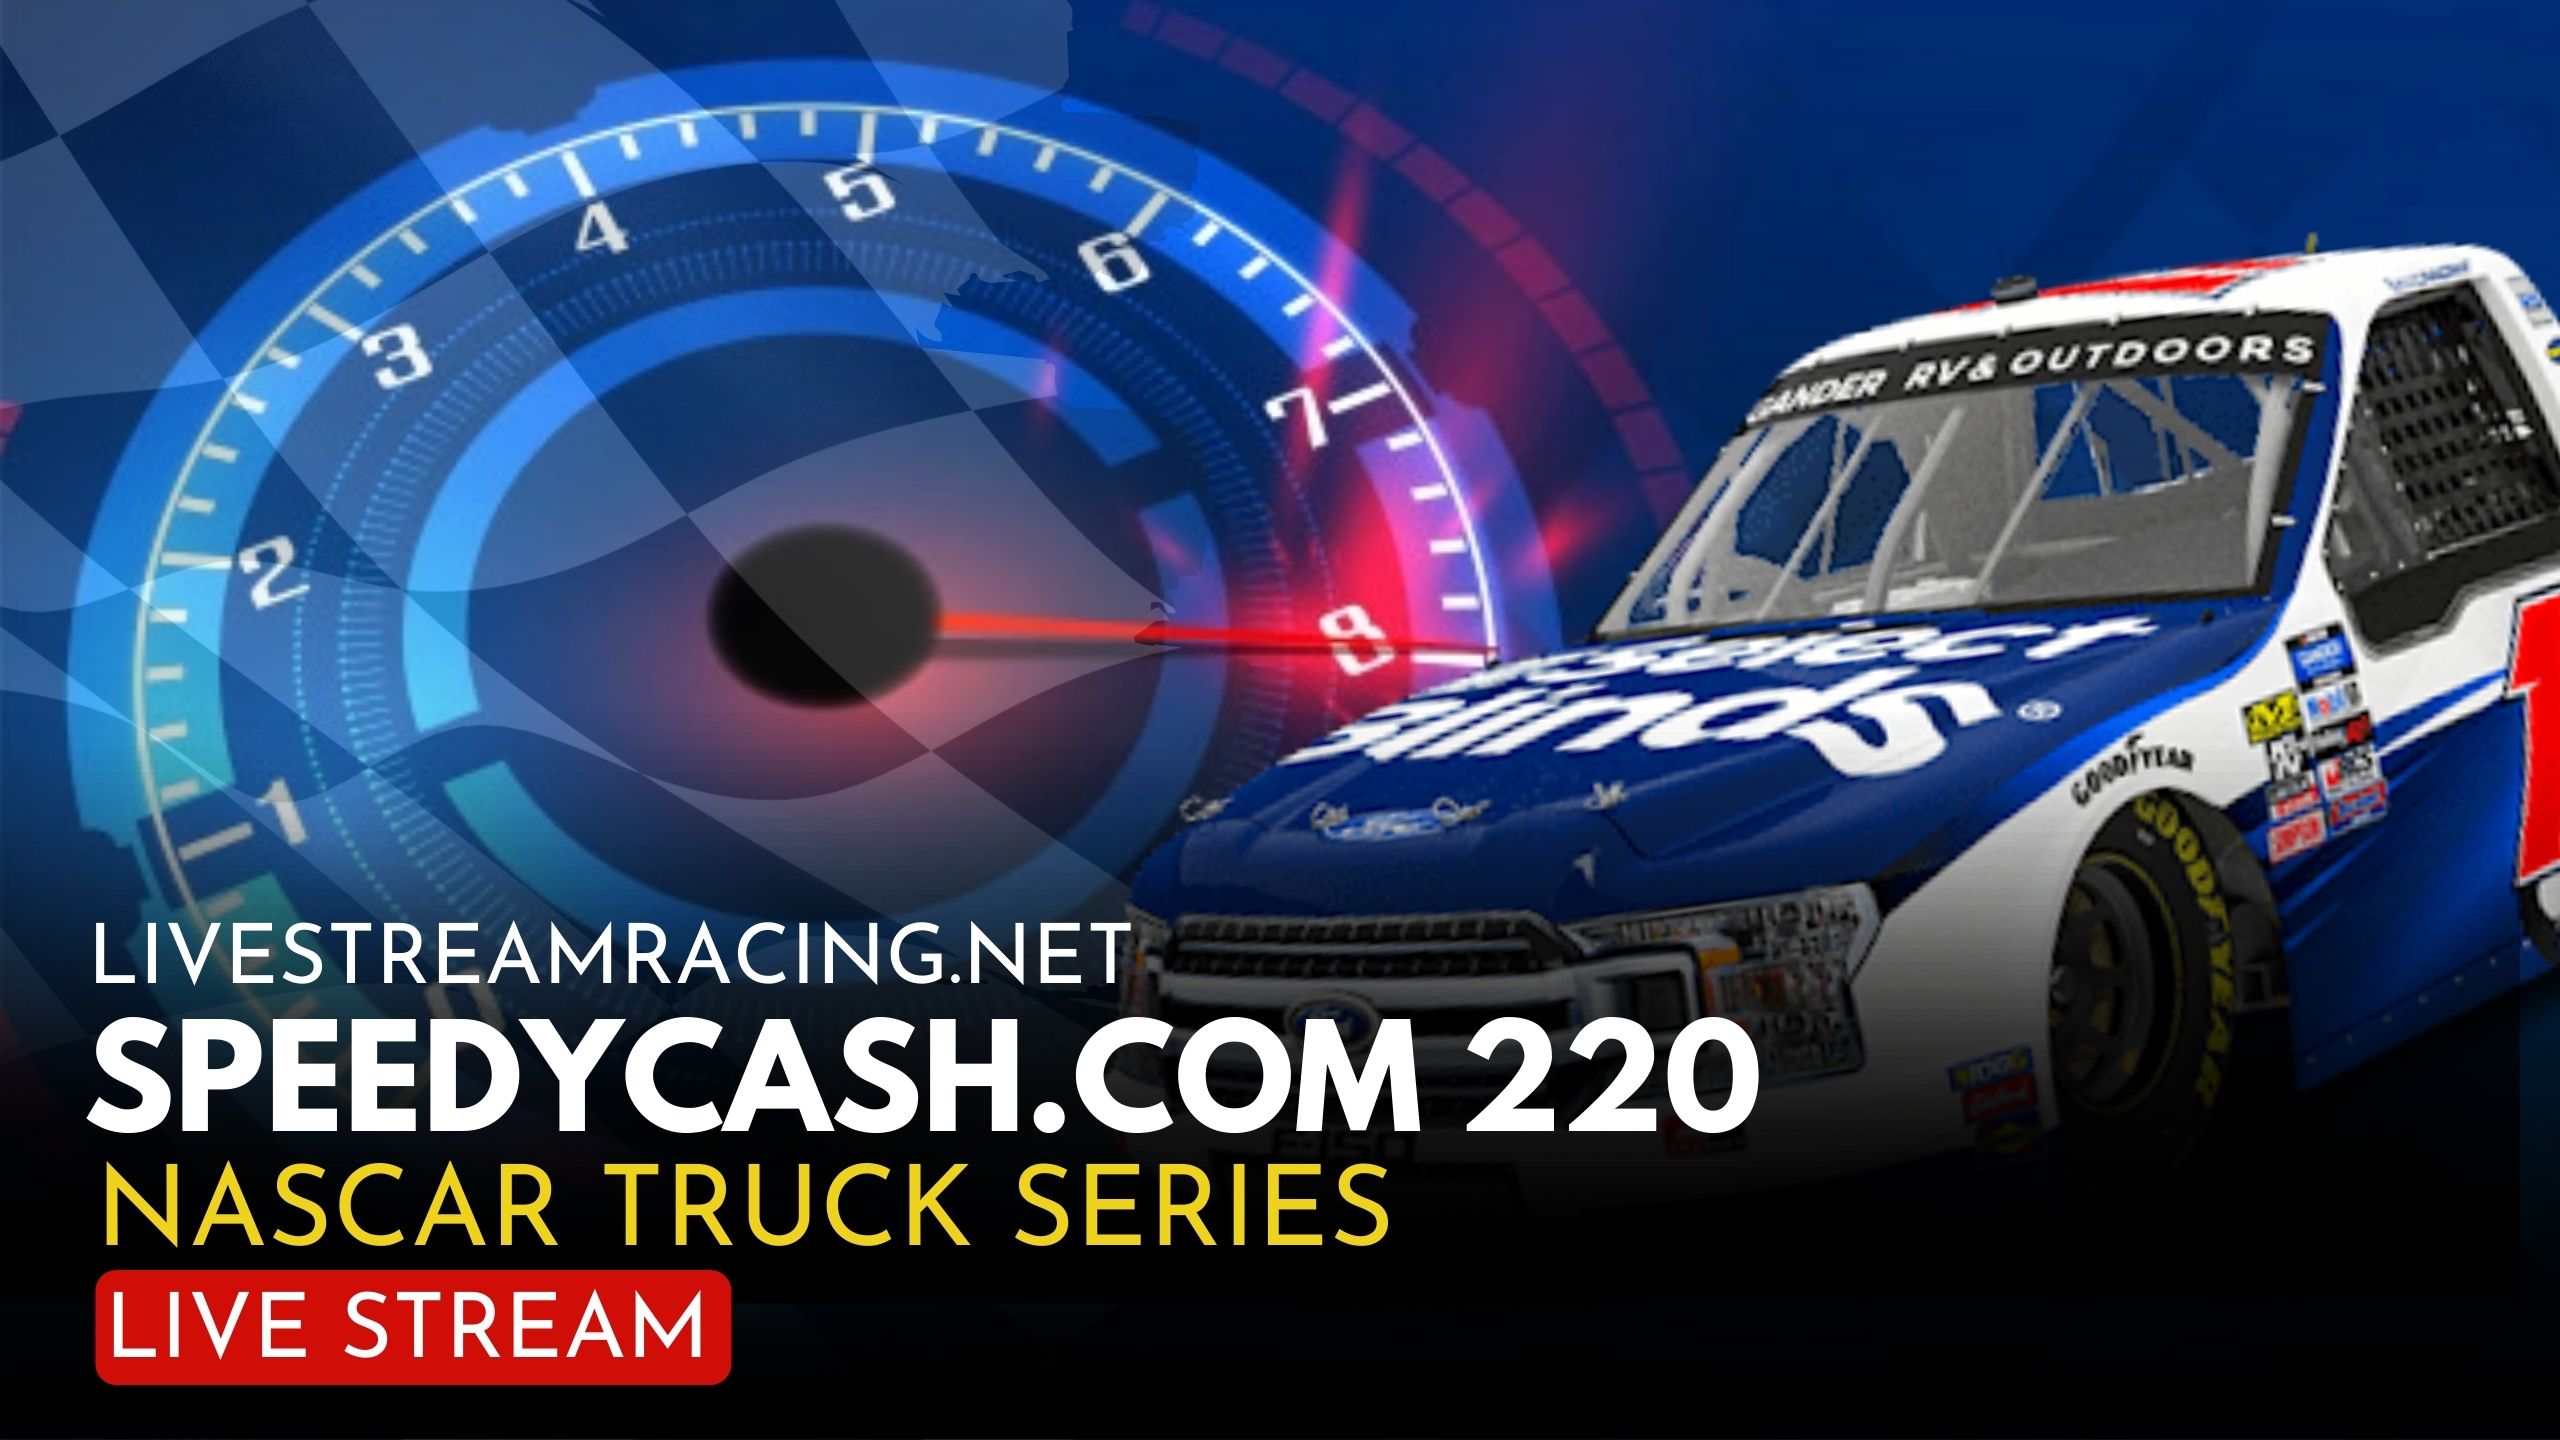 SpeedyCash.com 220 Nascar Live Stream 2022 | Truck Series slider